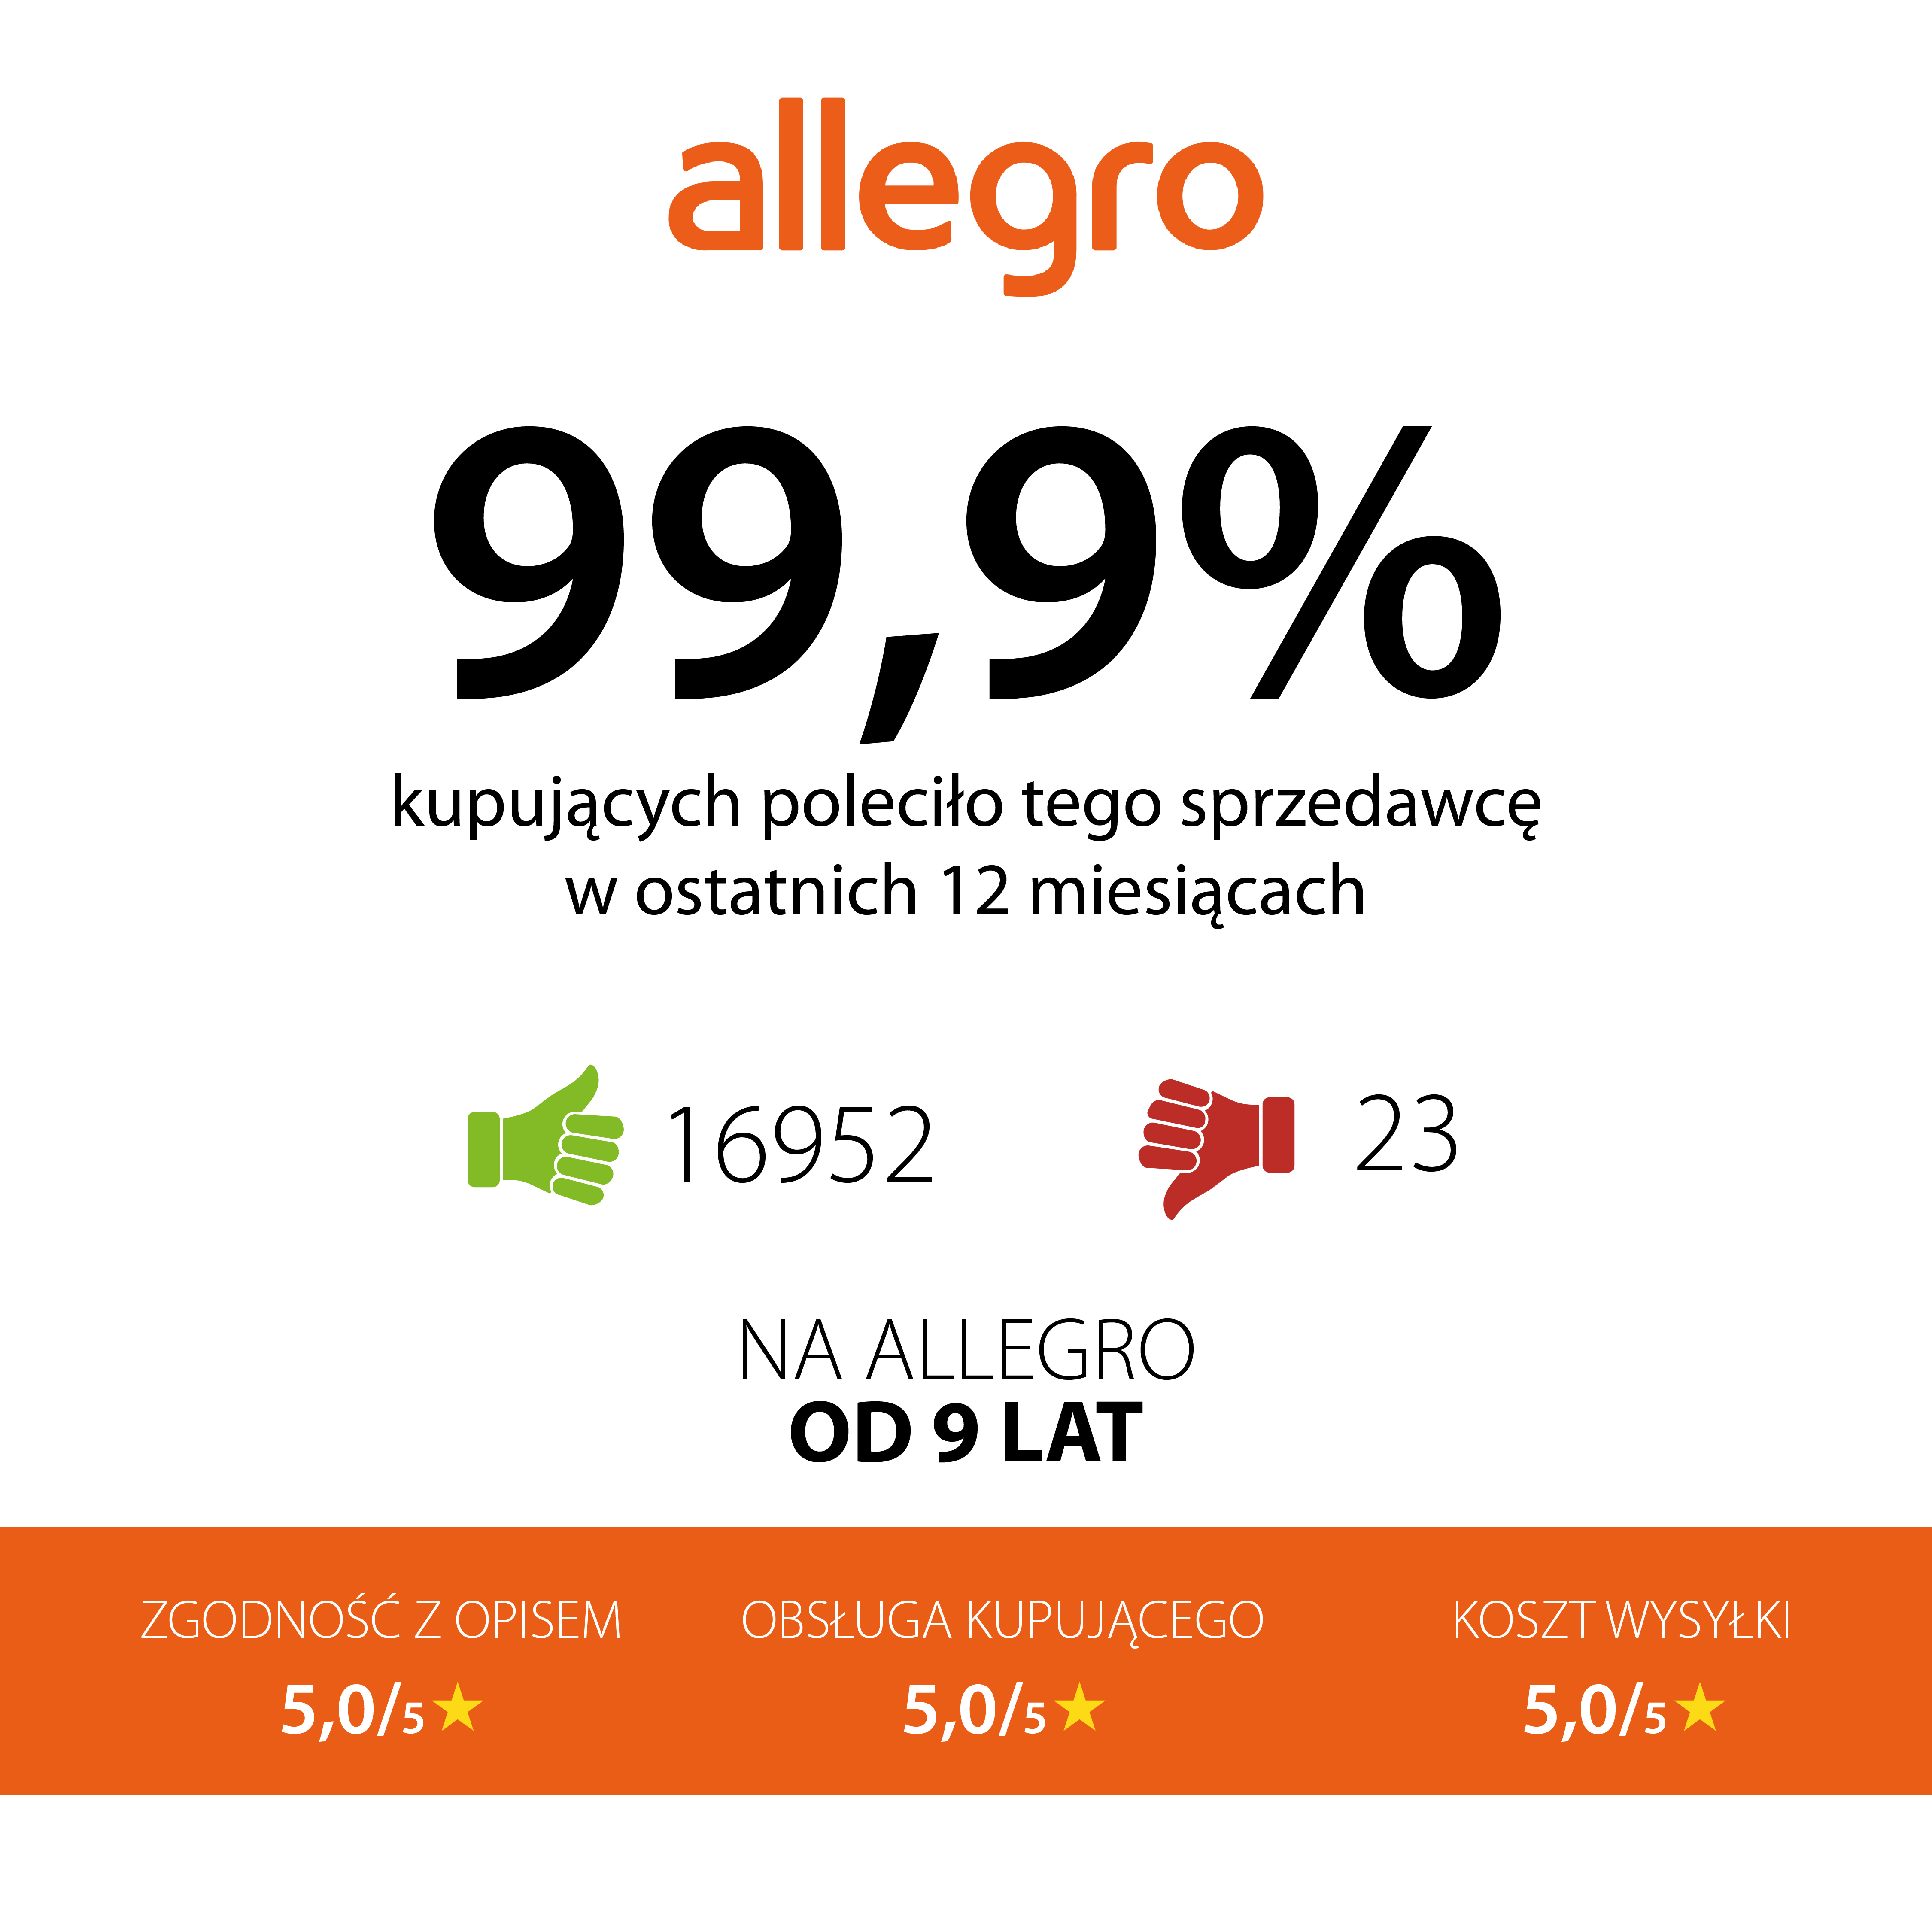 Zadowoleni klienci Allegro